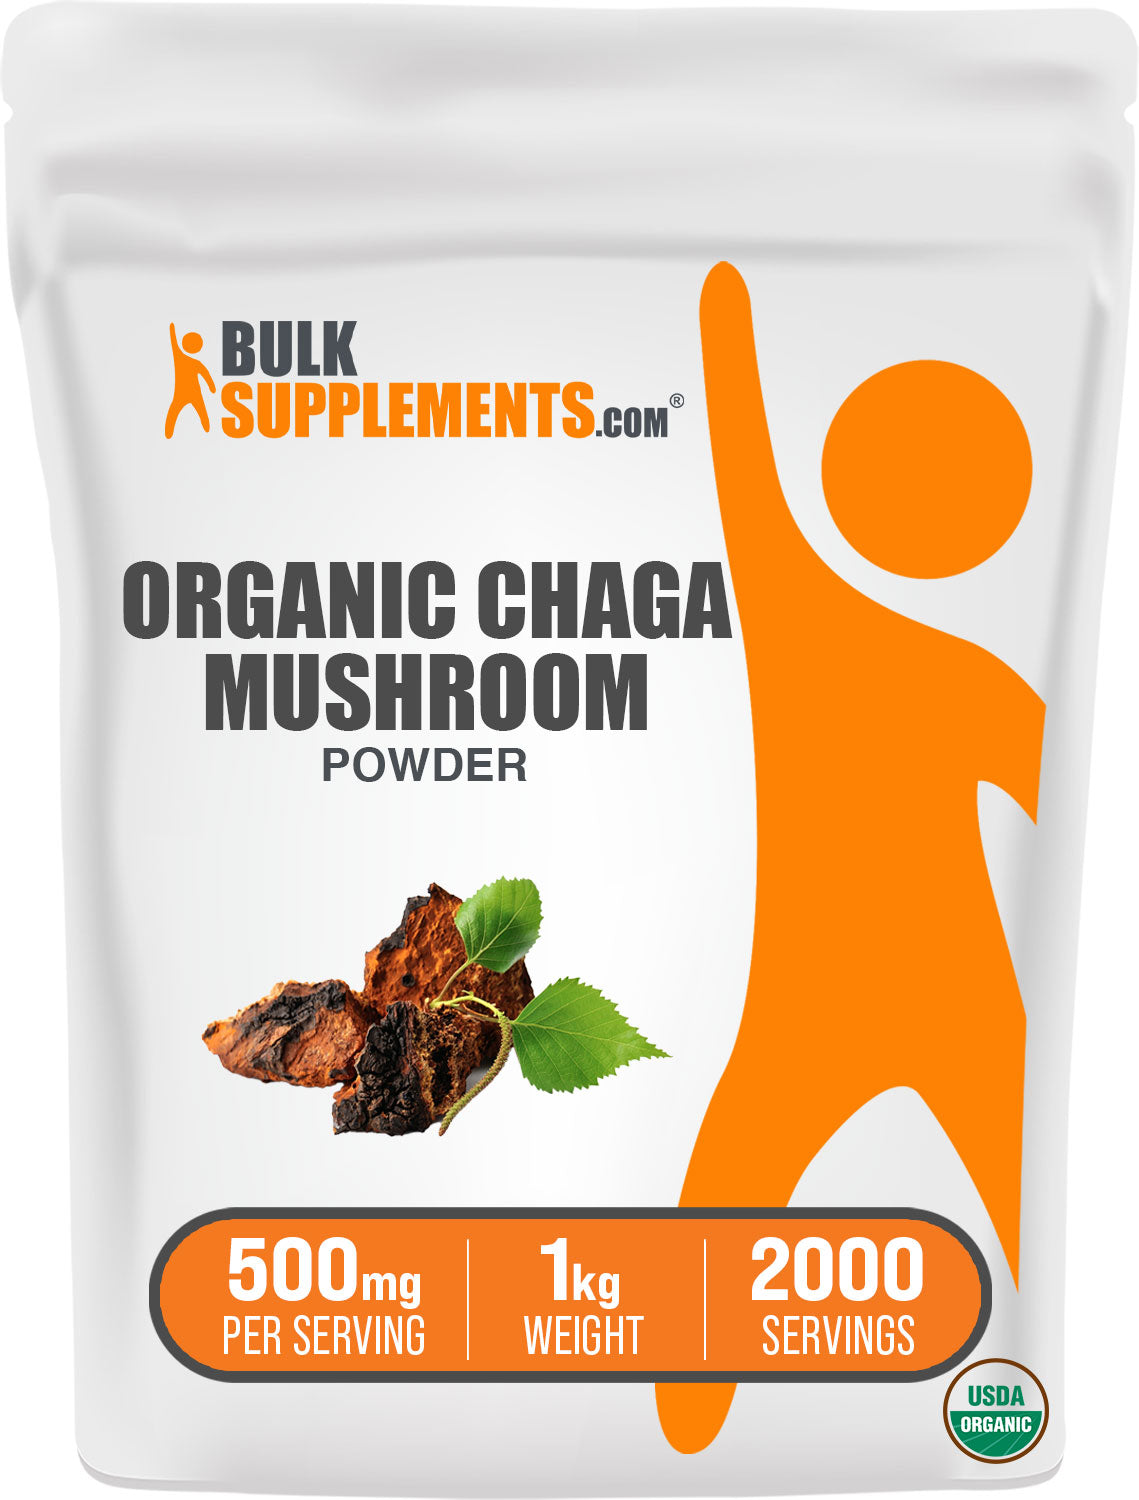 BulkSupplements.com Organic Chaga Mushroom Powder 1KG Bag